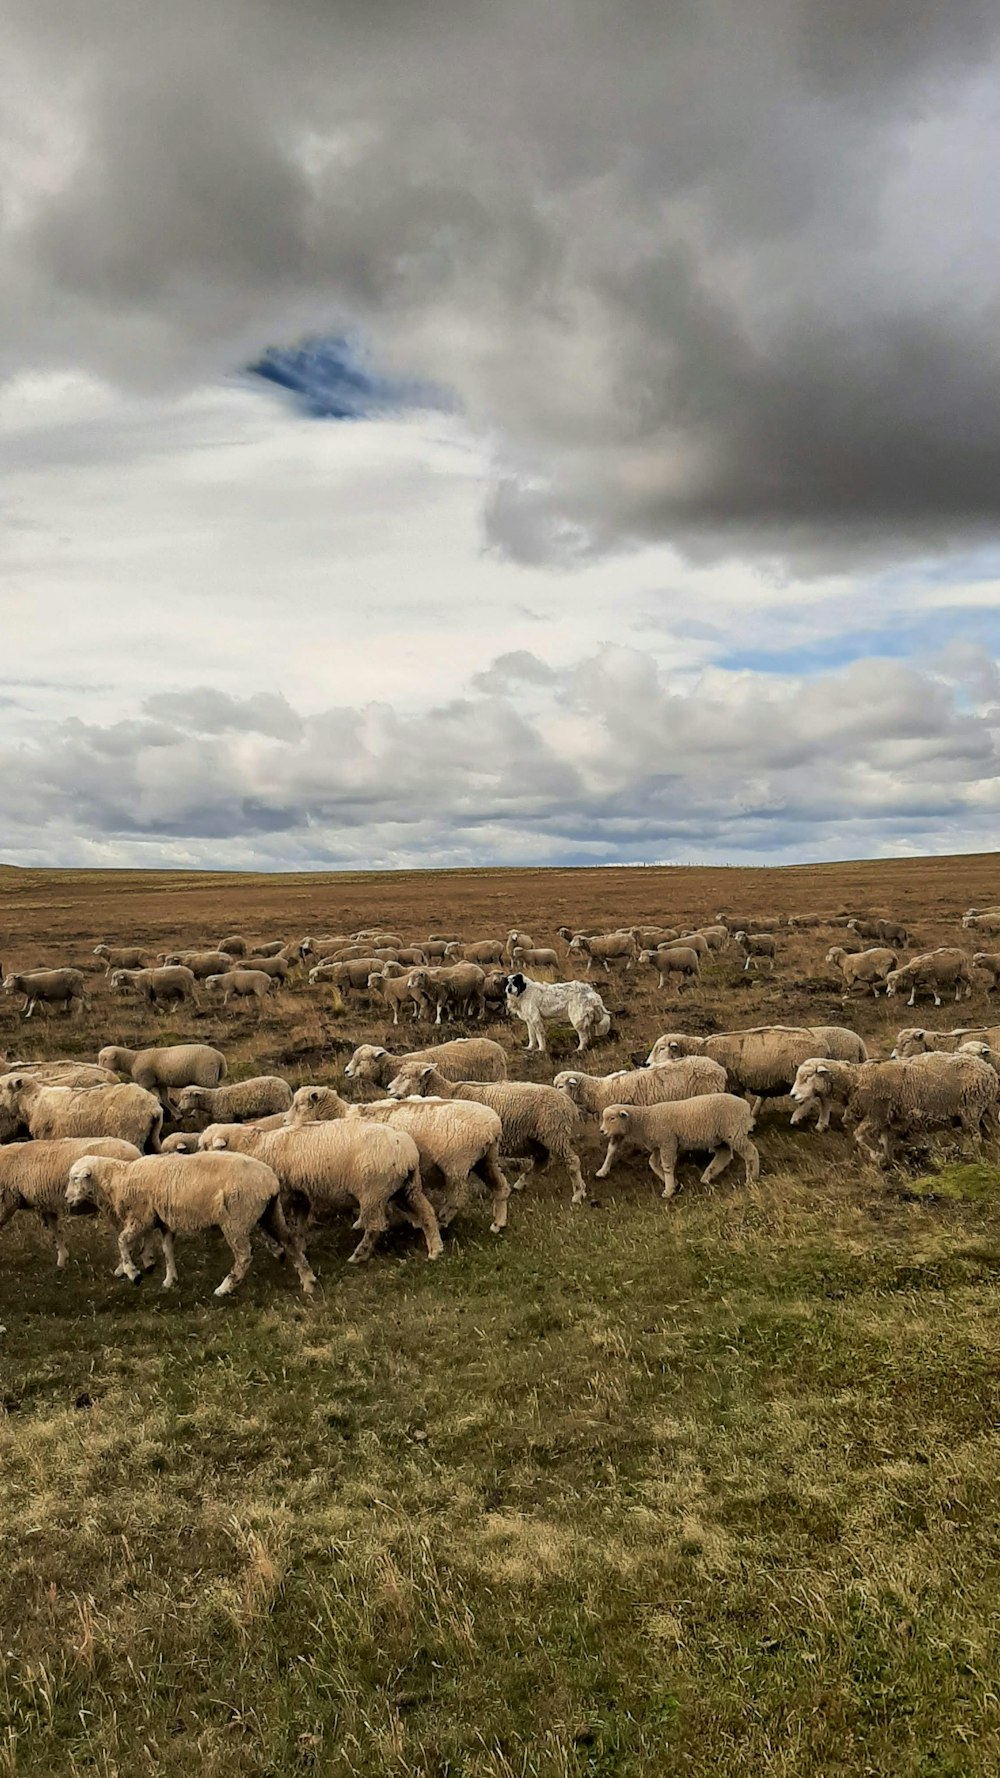 a herd of sheep walking across a grass covered field